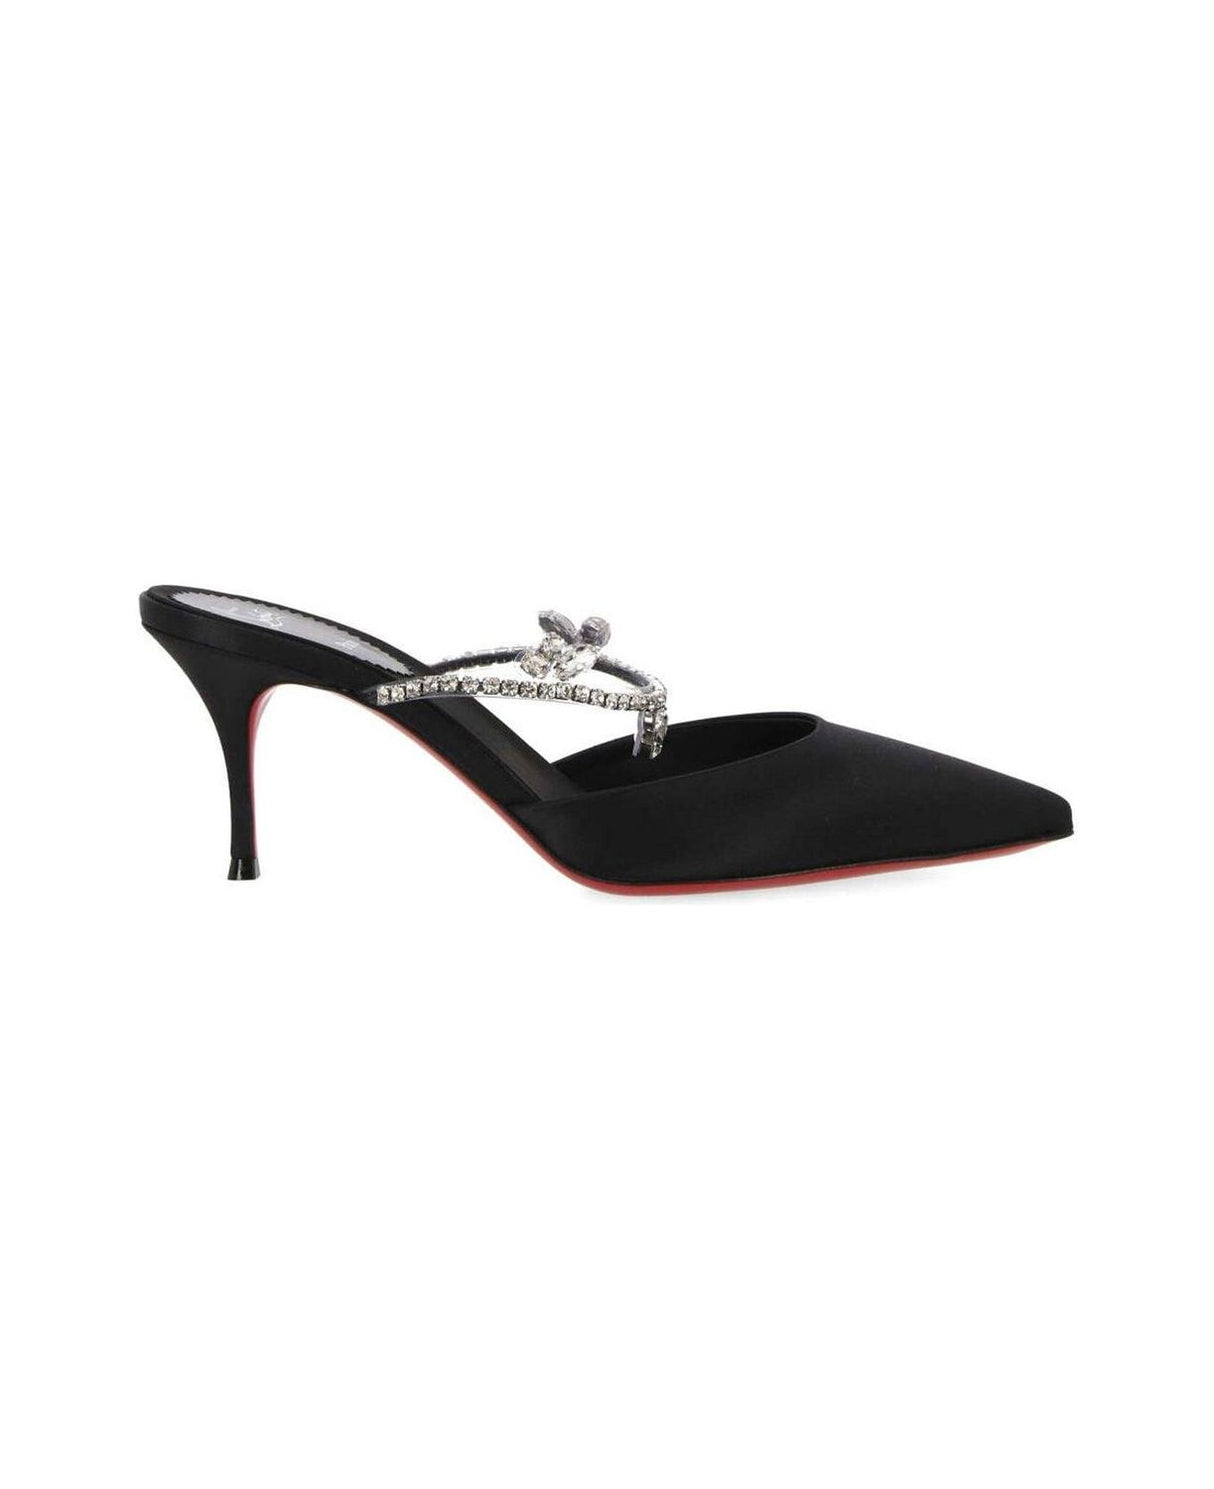 CHRISTIAN LOUBOUTIN Elegant Black Satin Crystal-Embellished Pointed Toe Mid Heel Pumps